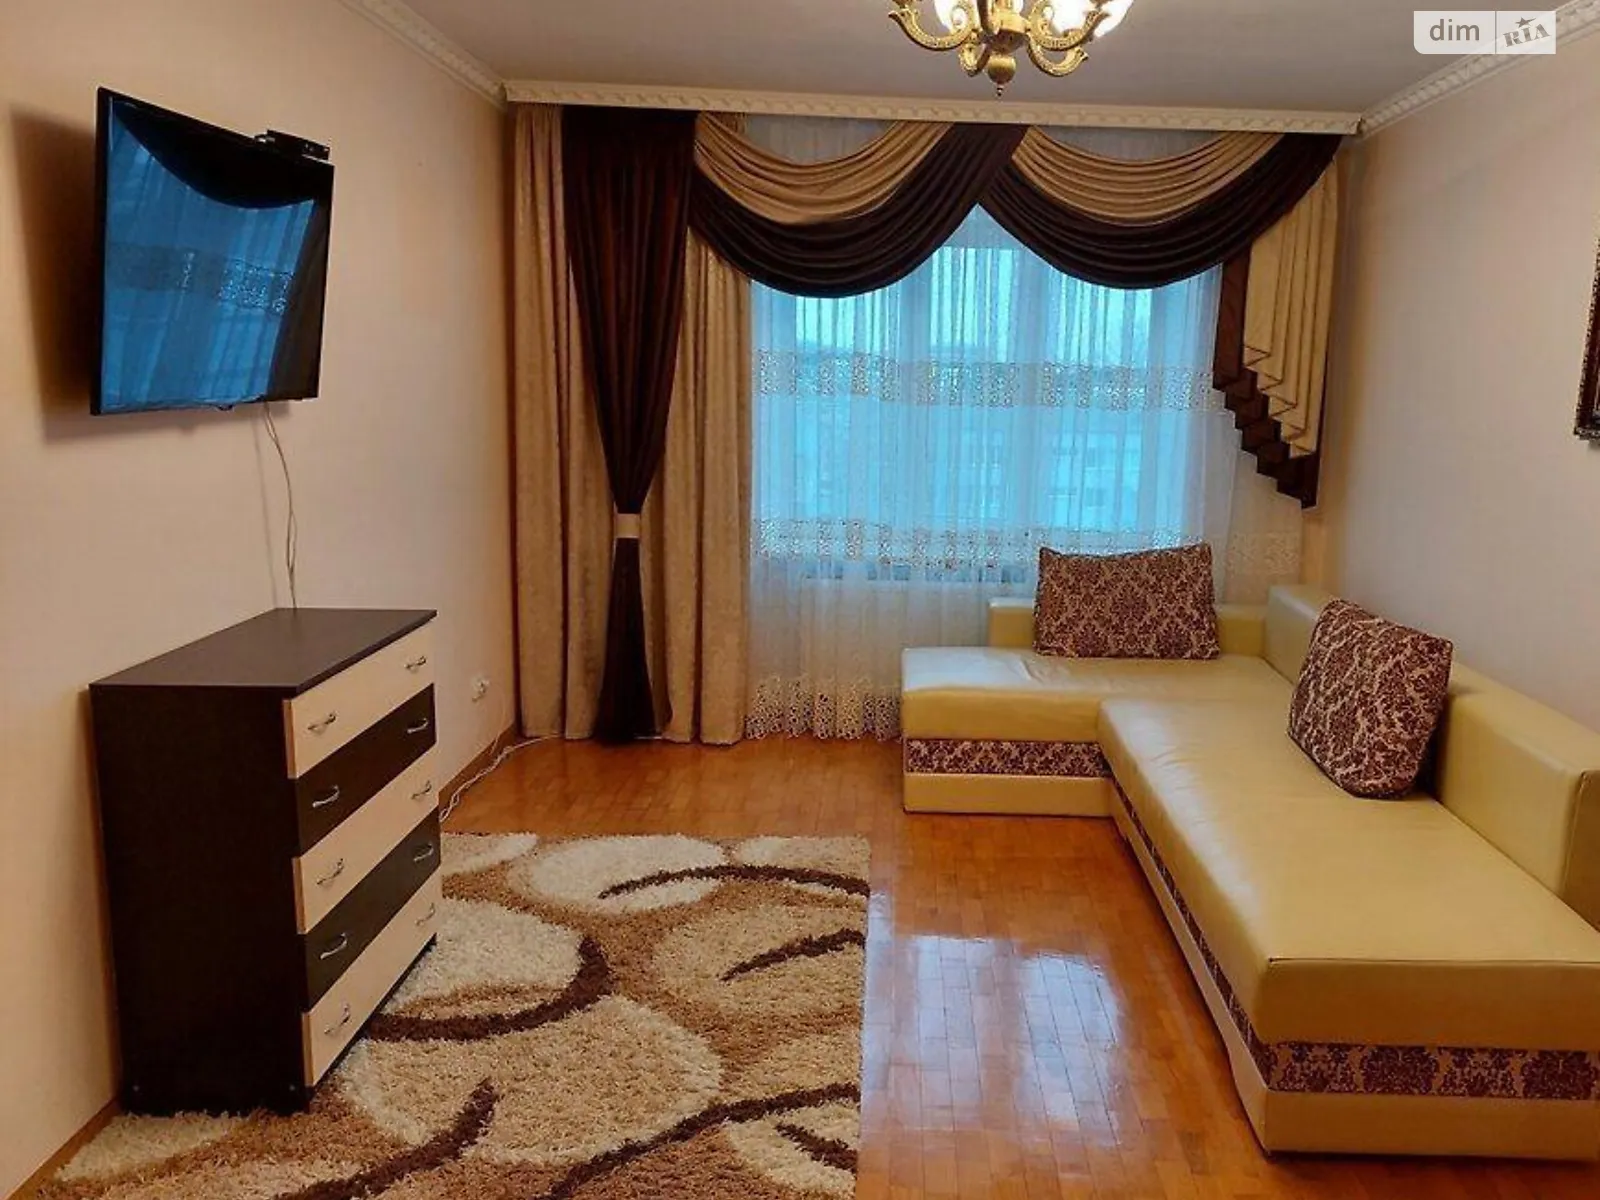 2-кімнатна квартира 55 кв. м у Тернополі, цена: 280 $ - фото 1